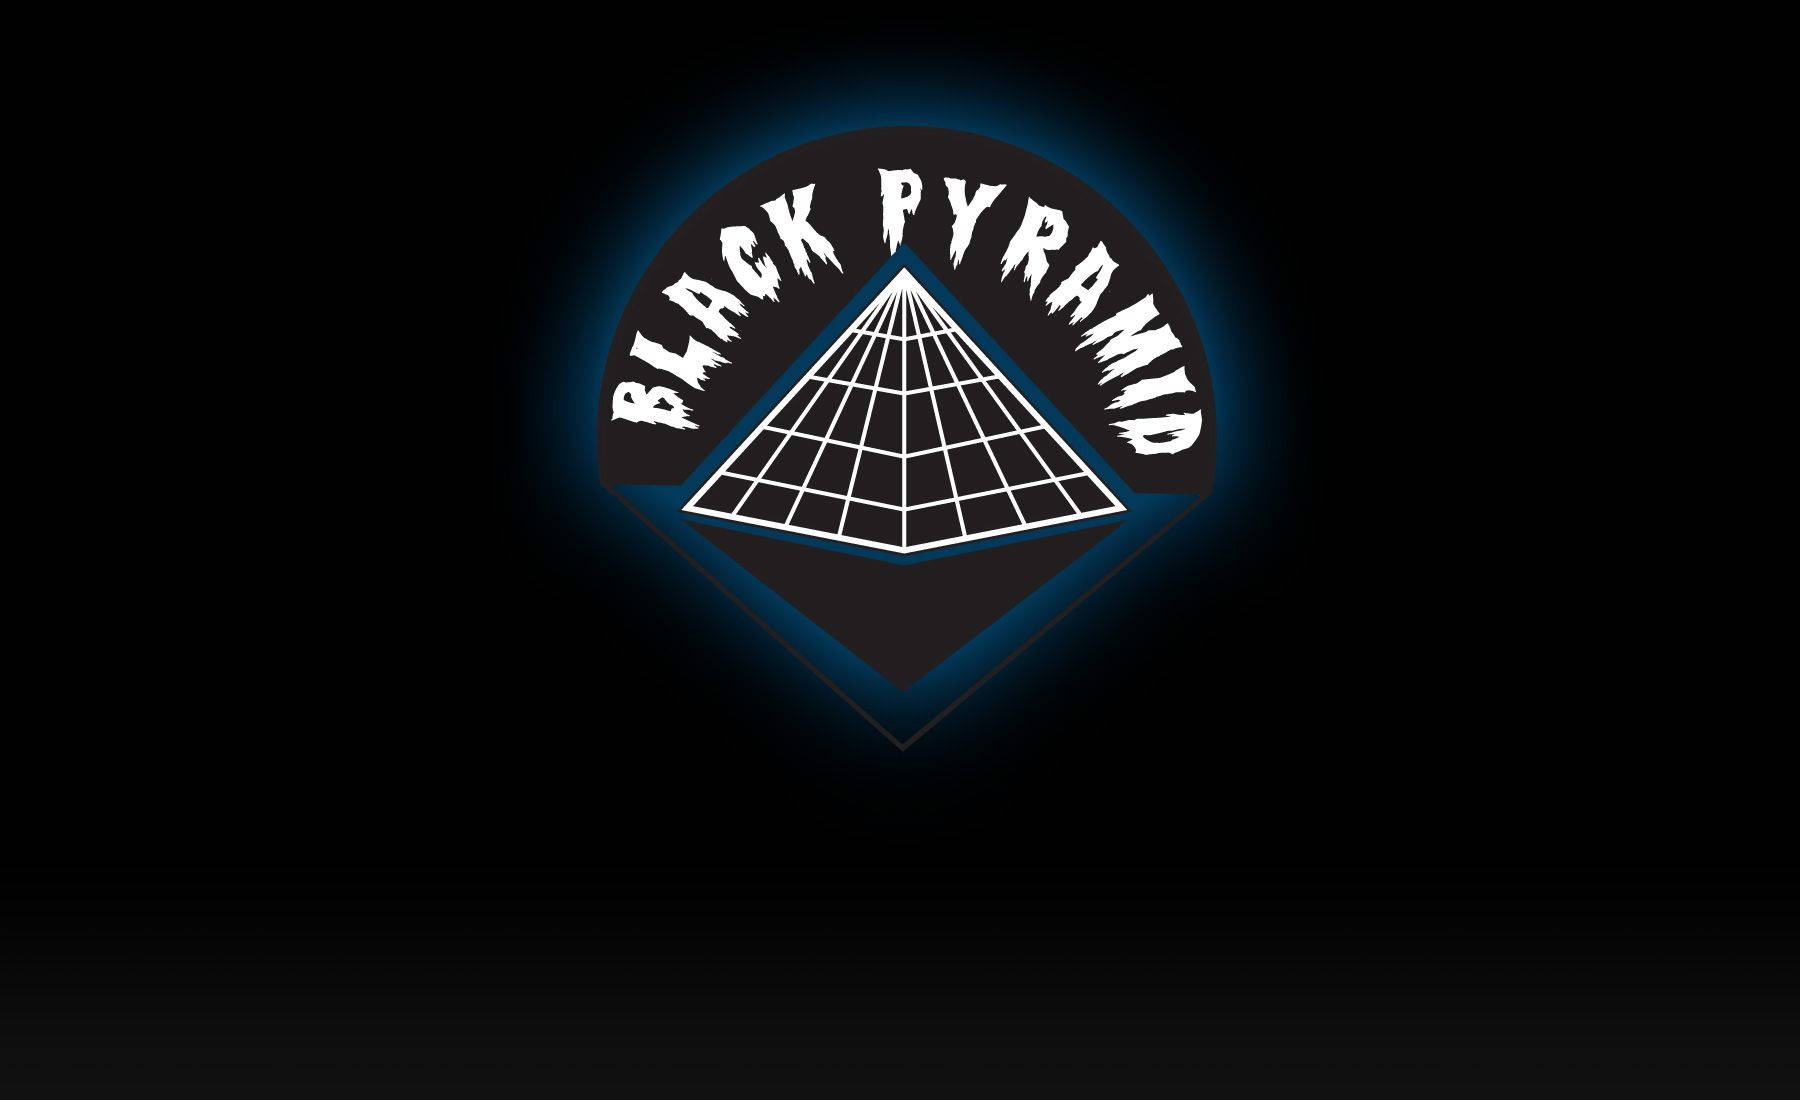 Caption: Captivating Black Pyramid With White Gridlines